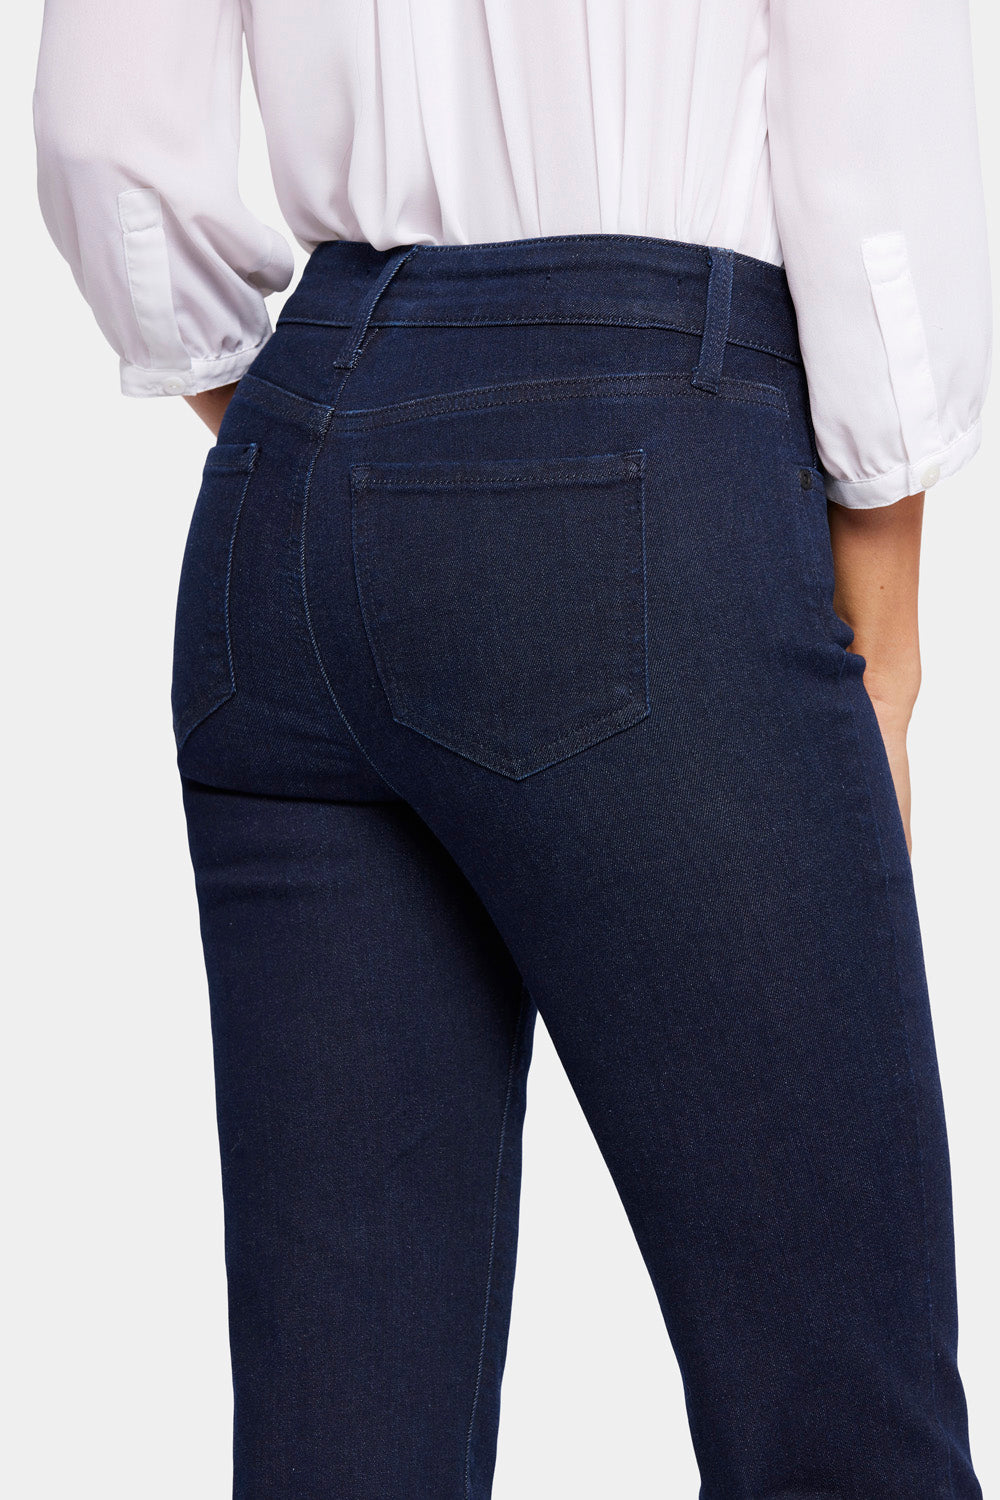 Womens Jeans 28 Inch Inseam